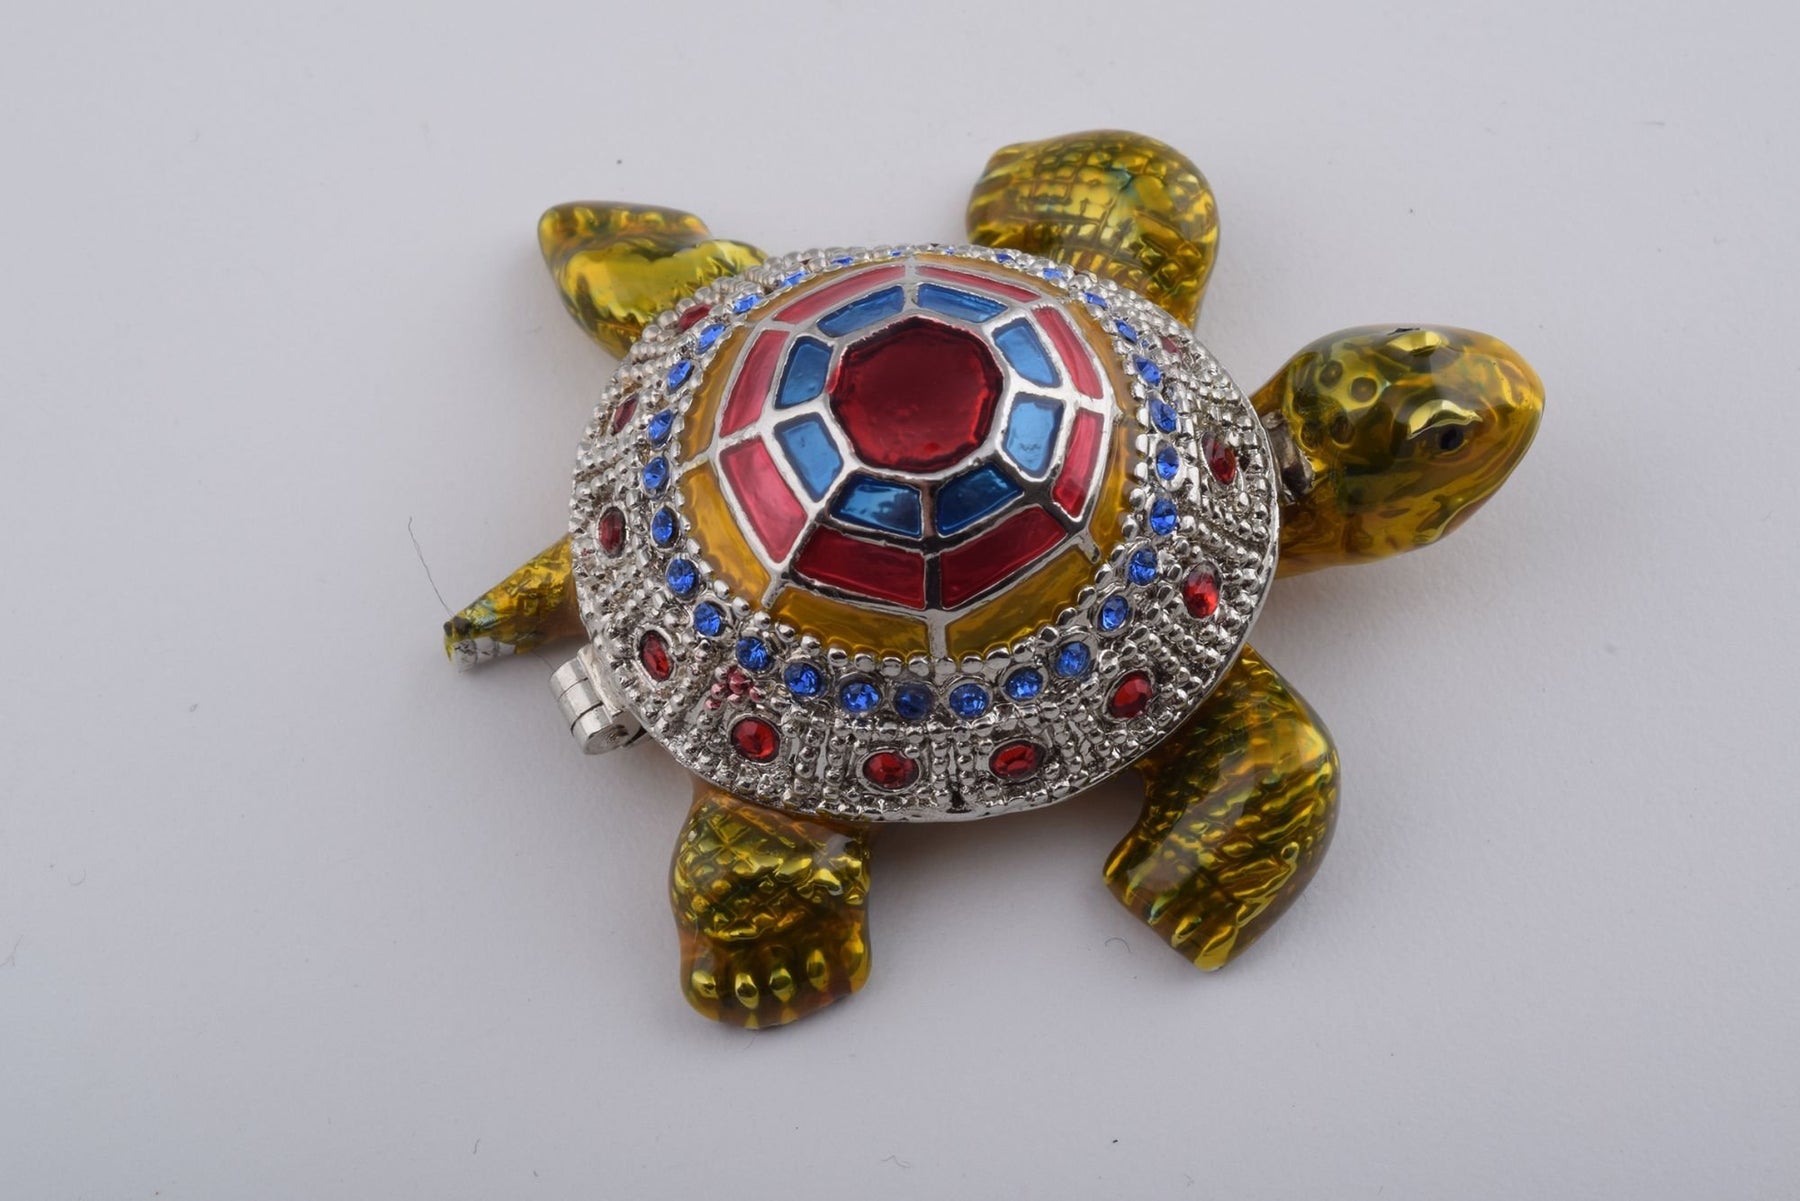 Keren Kopal Colorful Shell Turtle  40.25